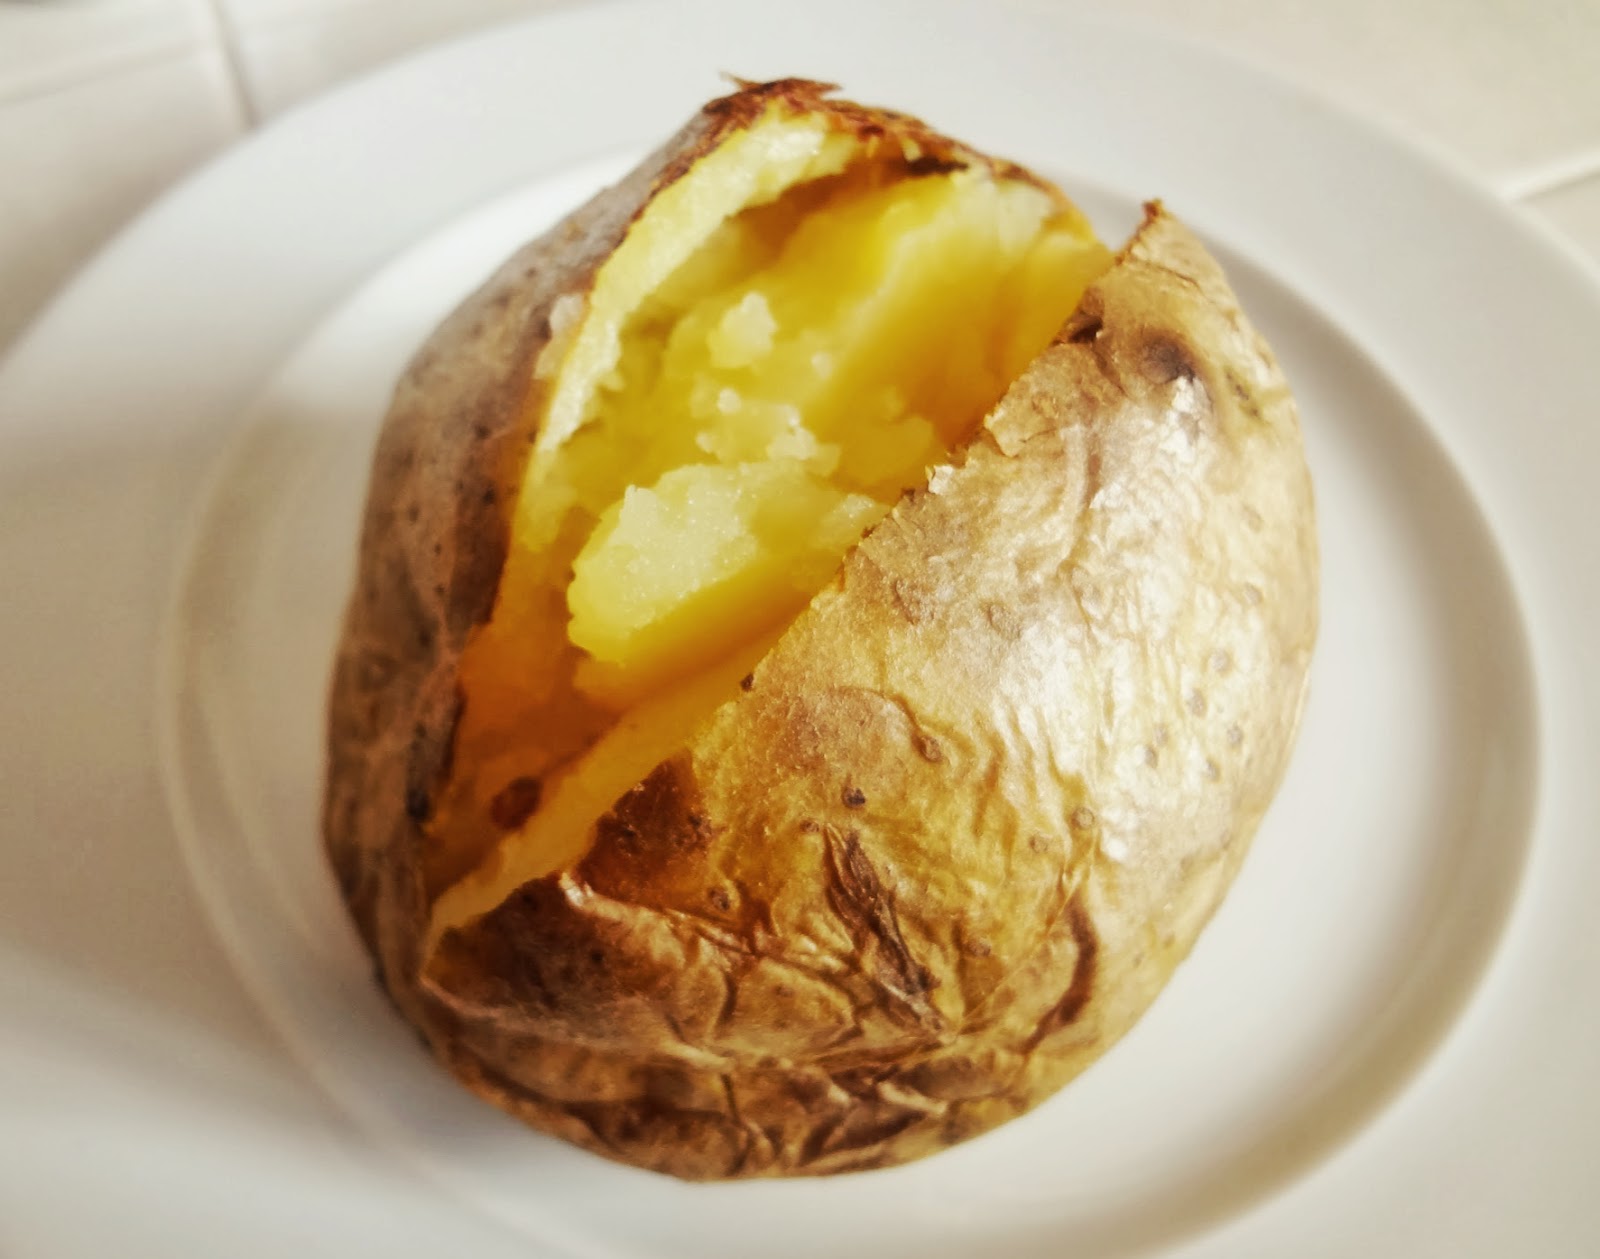 Perfect Baked Potato with crispy skin